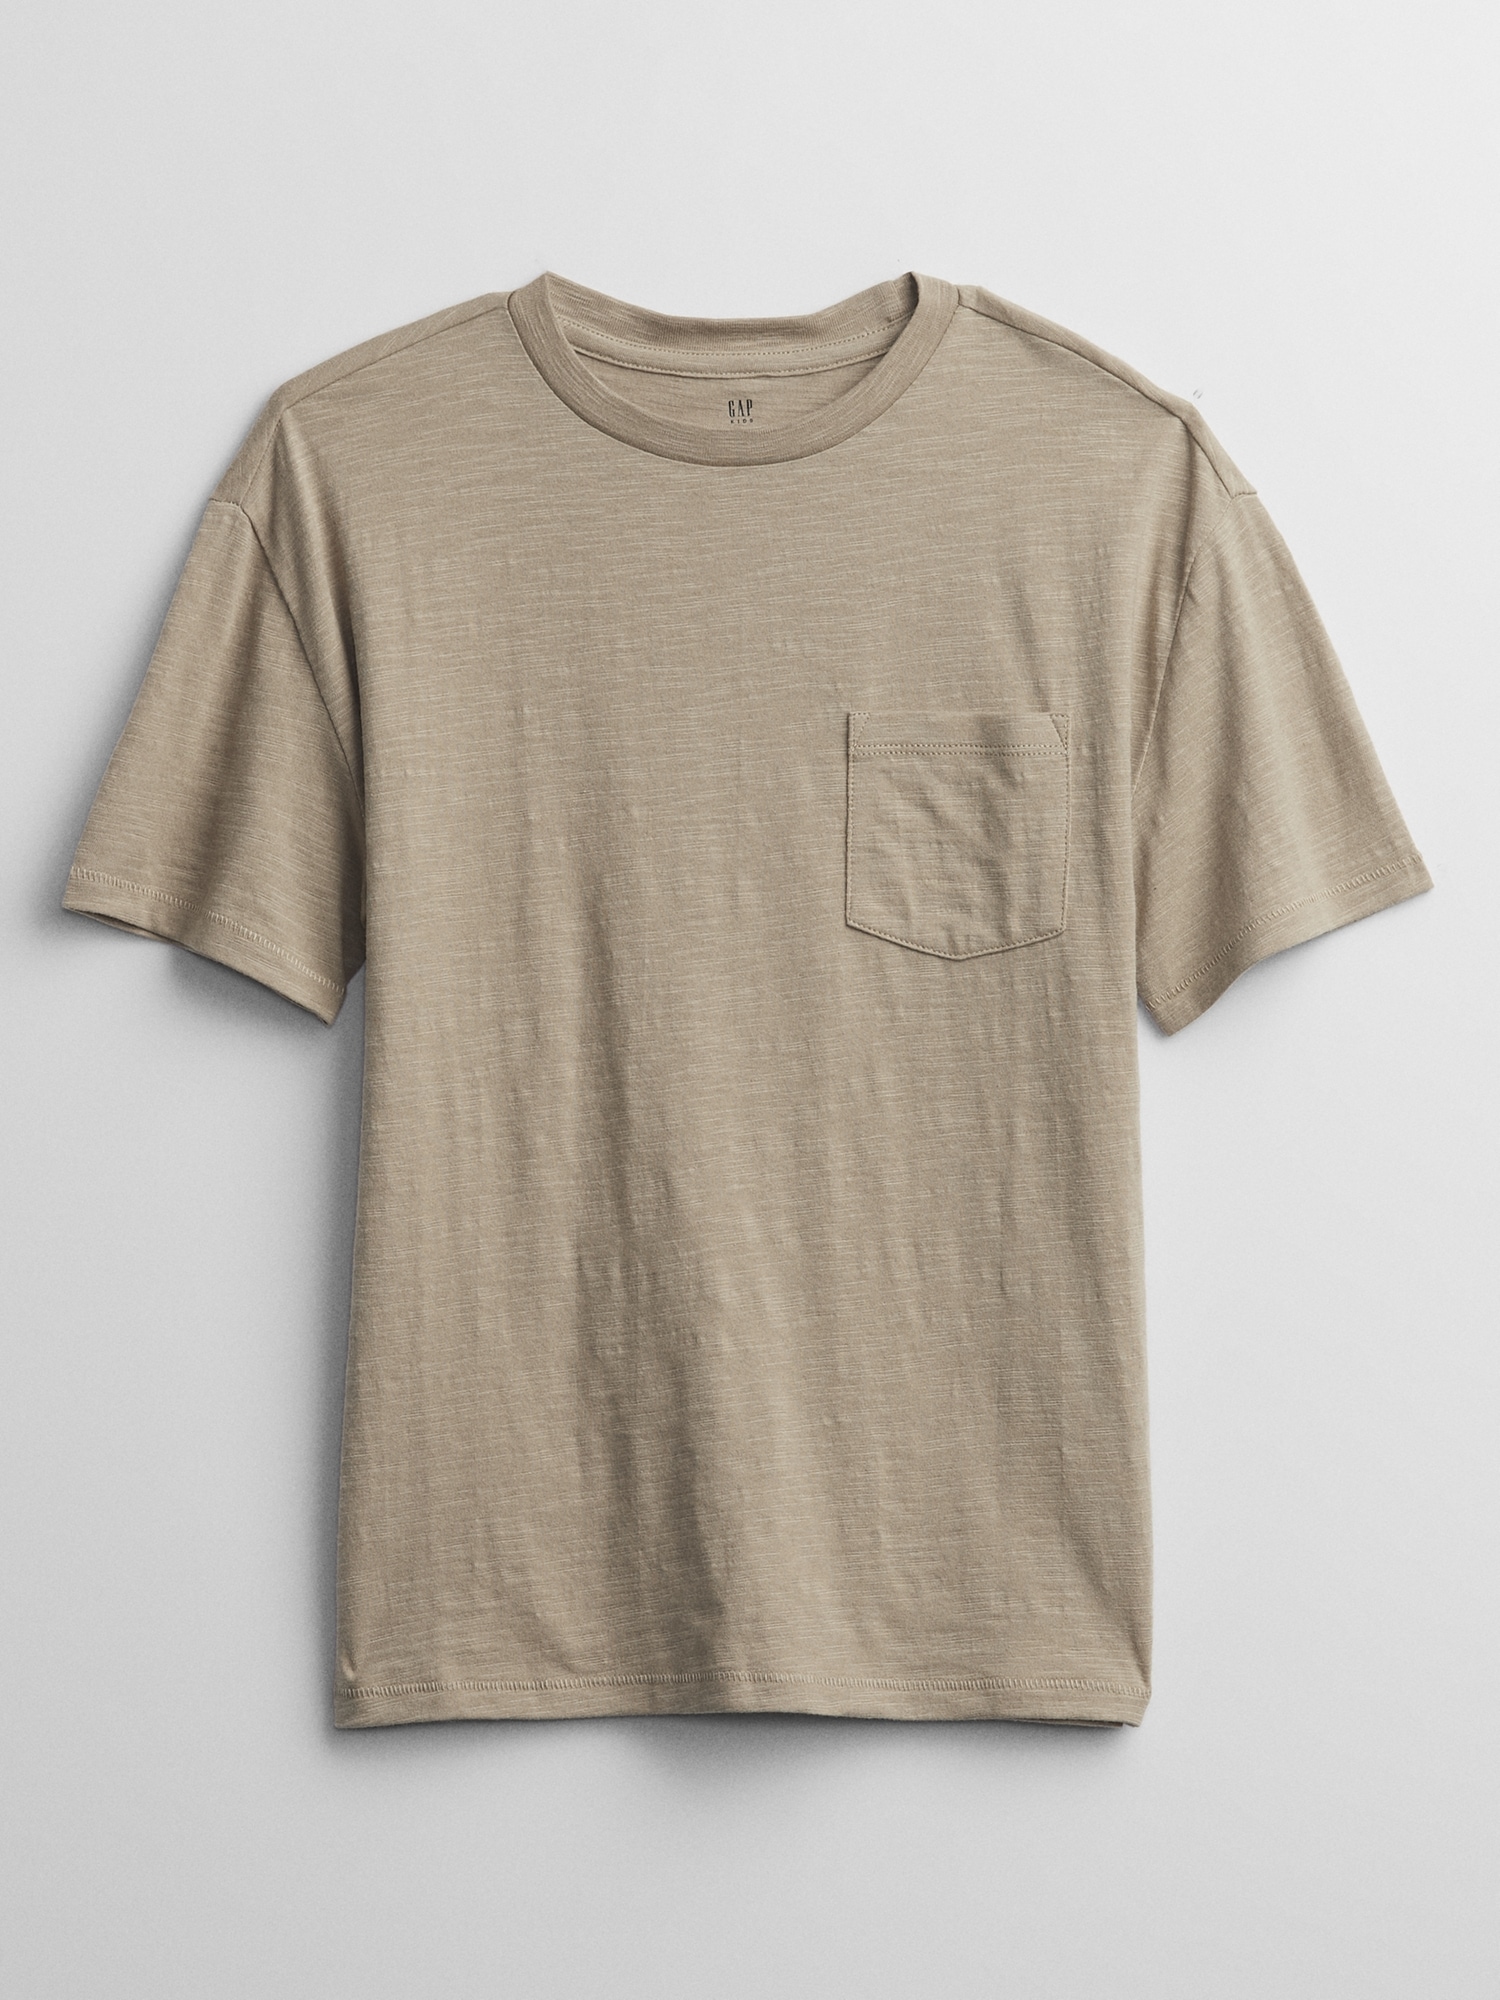 Kids Pocket T-Shirt | Gap Factory